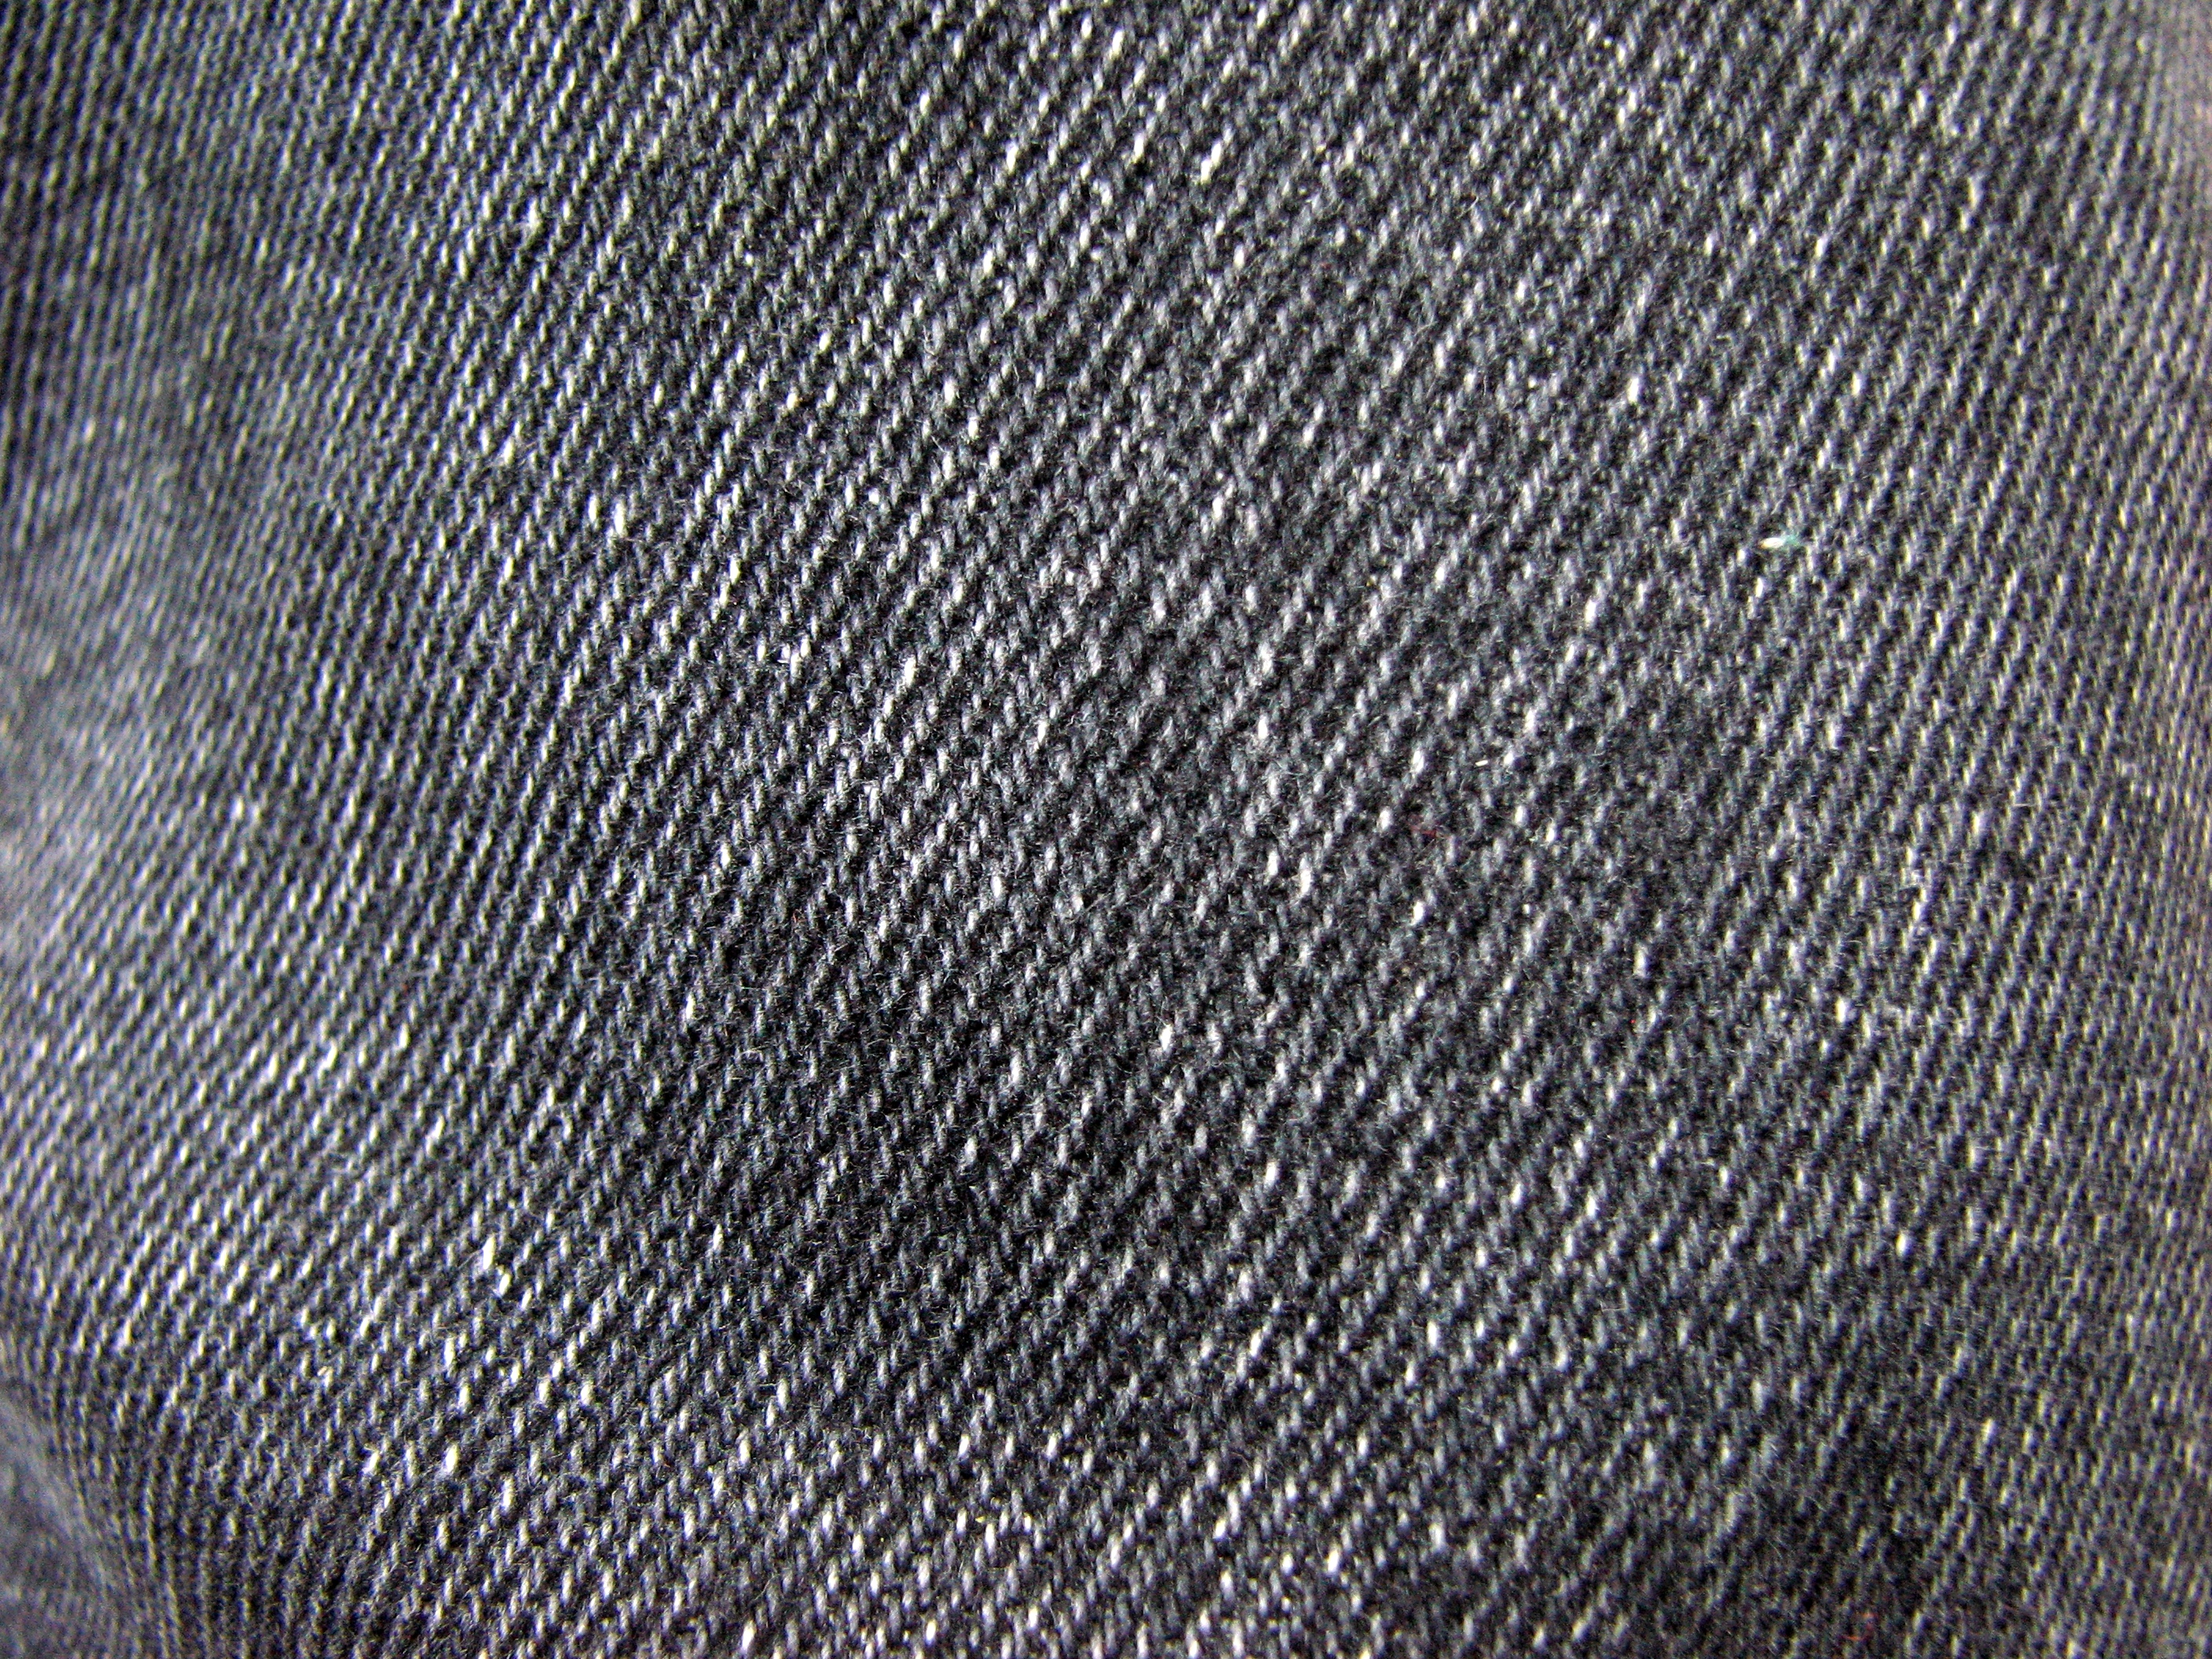 http://fc09.deviantart.net/fs40/f/2009/006/7/2/Black_Jean_Cloth_Texture_by_surajram.jpg